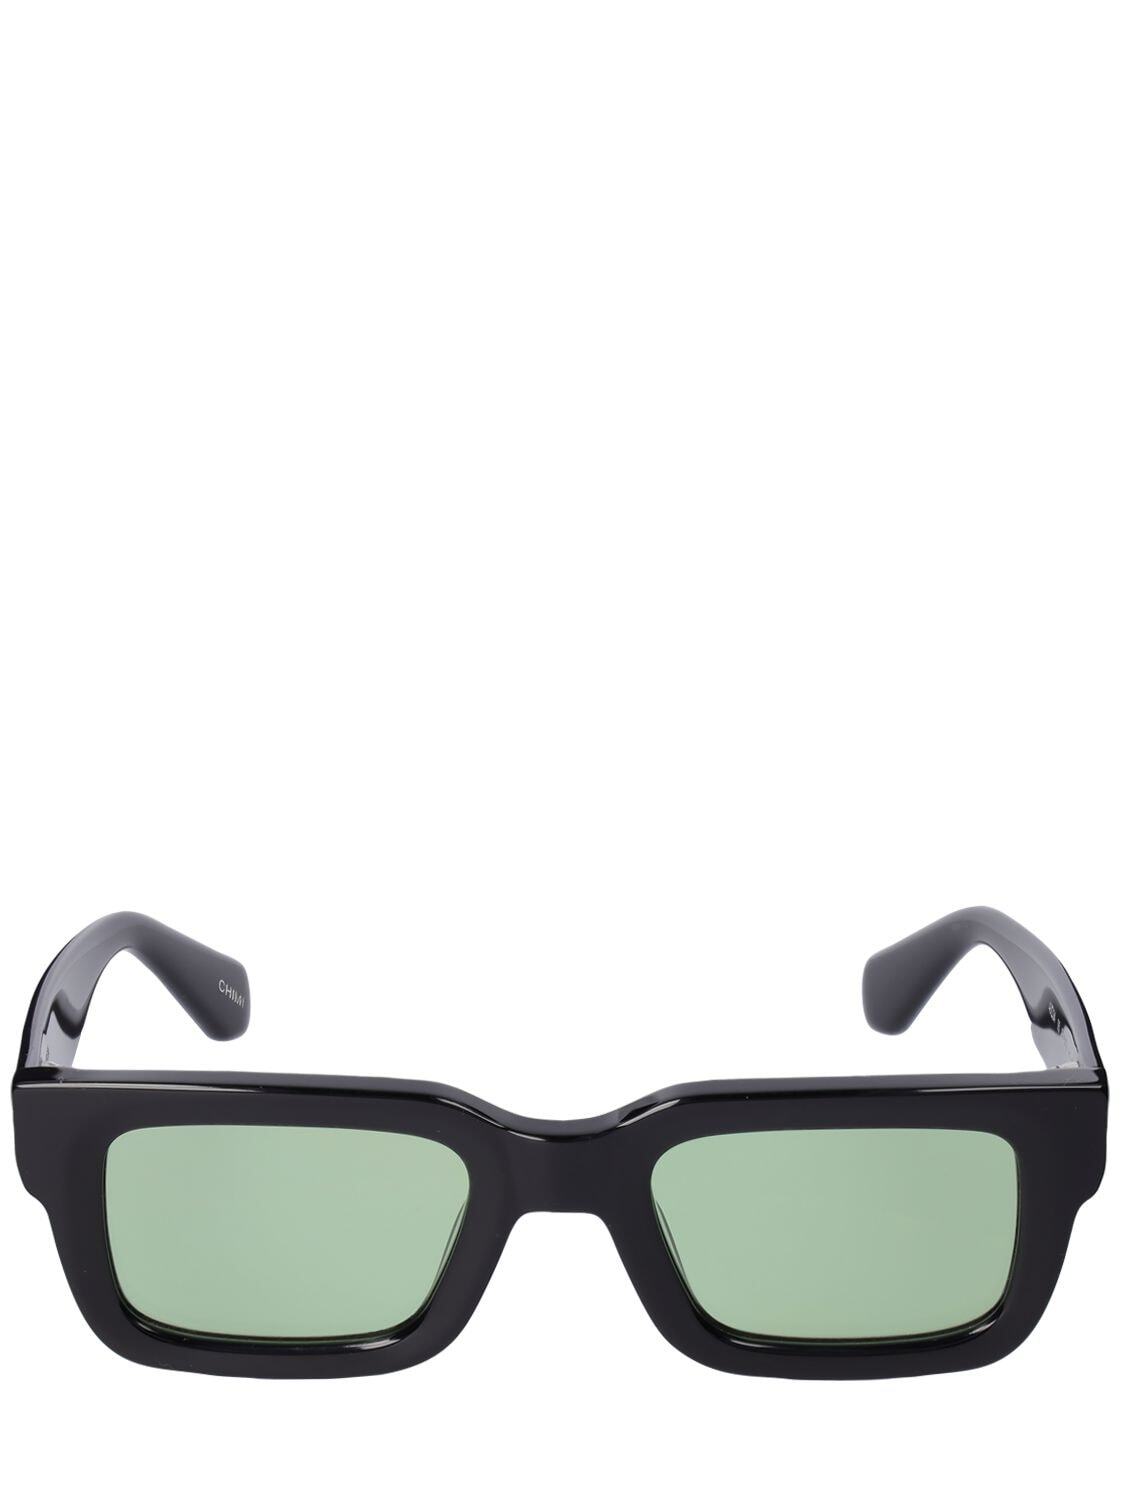 CHIMI 05 Squared Acetate Sunglasses in black / green